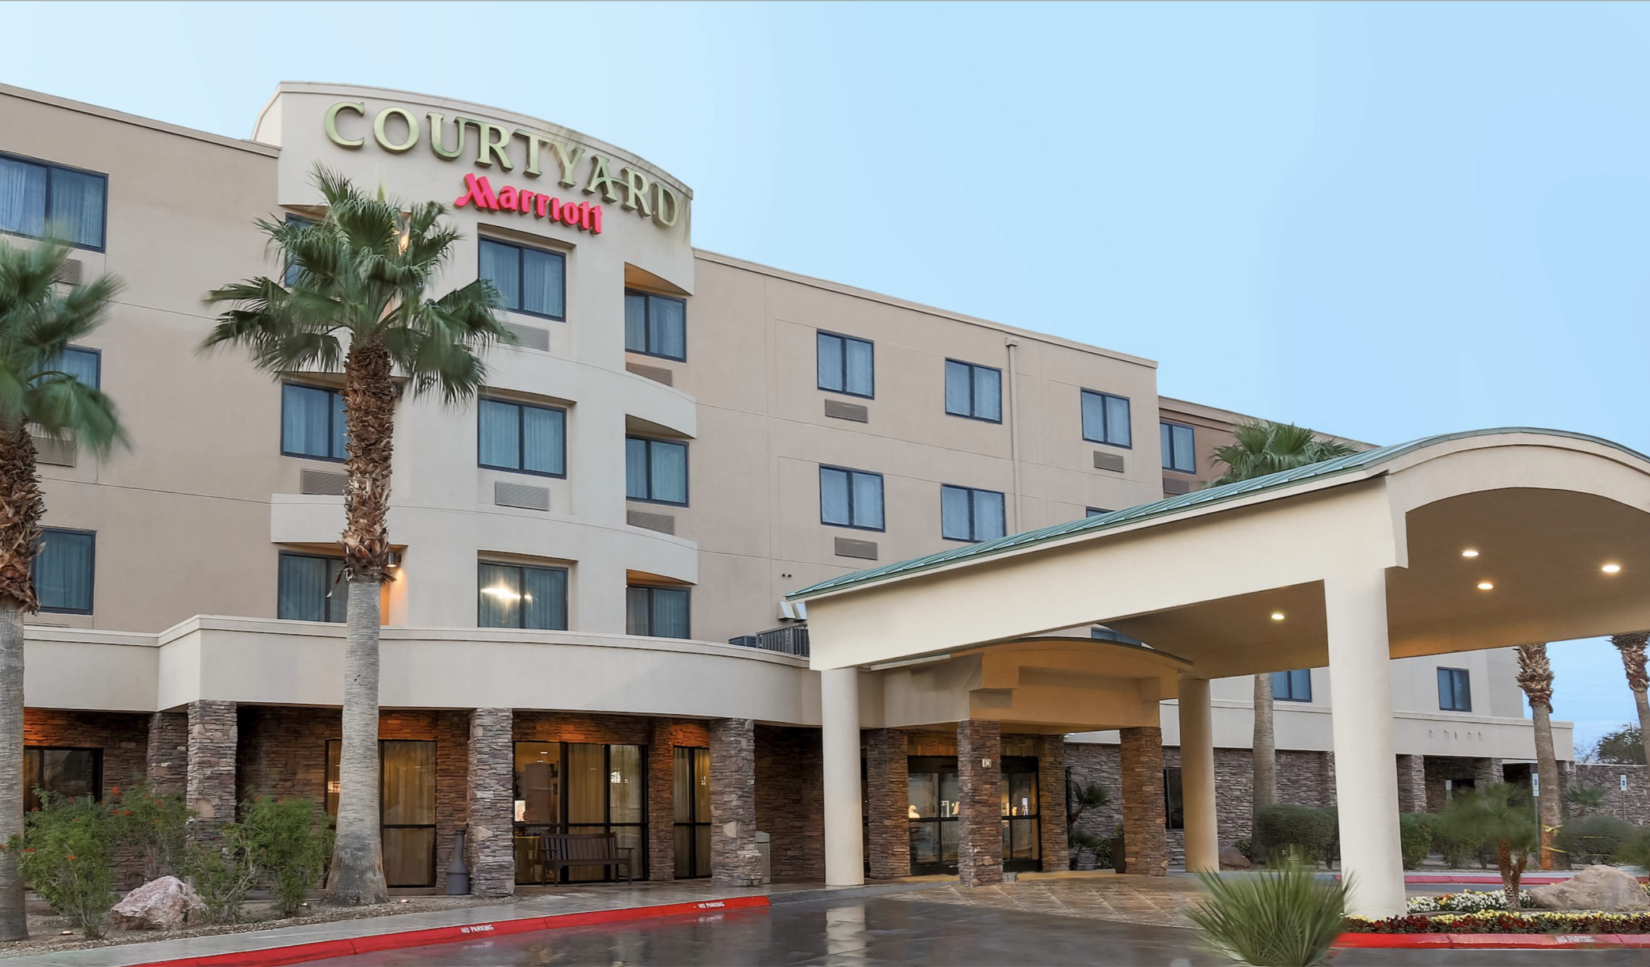 Coutyard Marriott Las Vegas South